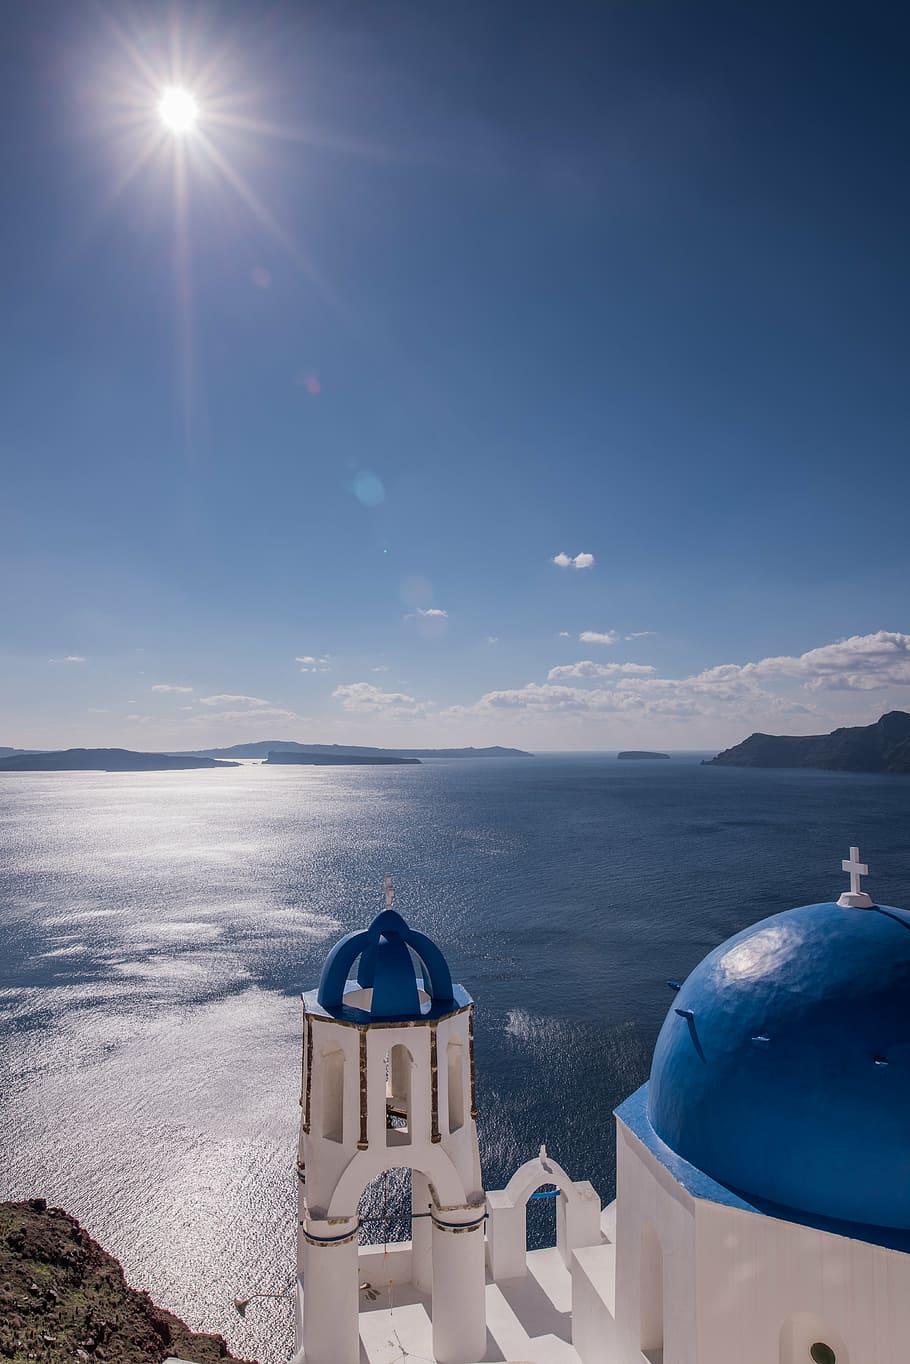 Santorini, Greece, midday sun, blue dome, church, aegean sea